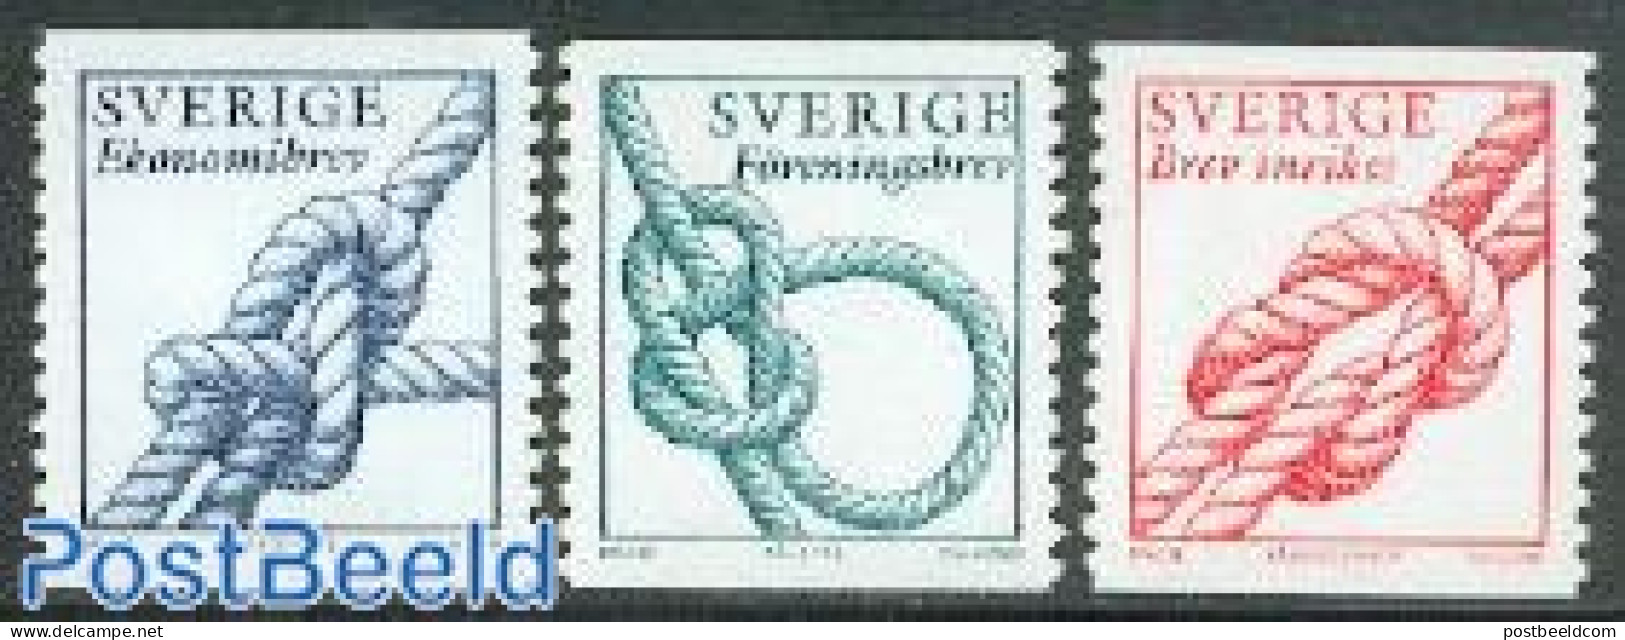 Sweden 2003 Knots 3v, Mint NH - Ongebruikt